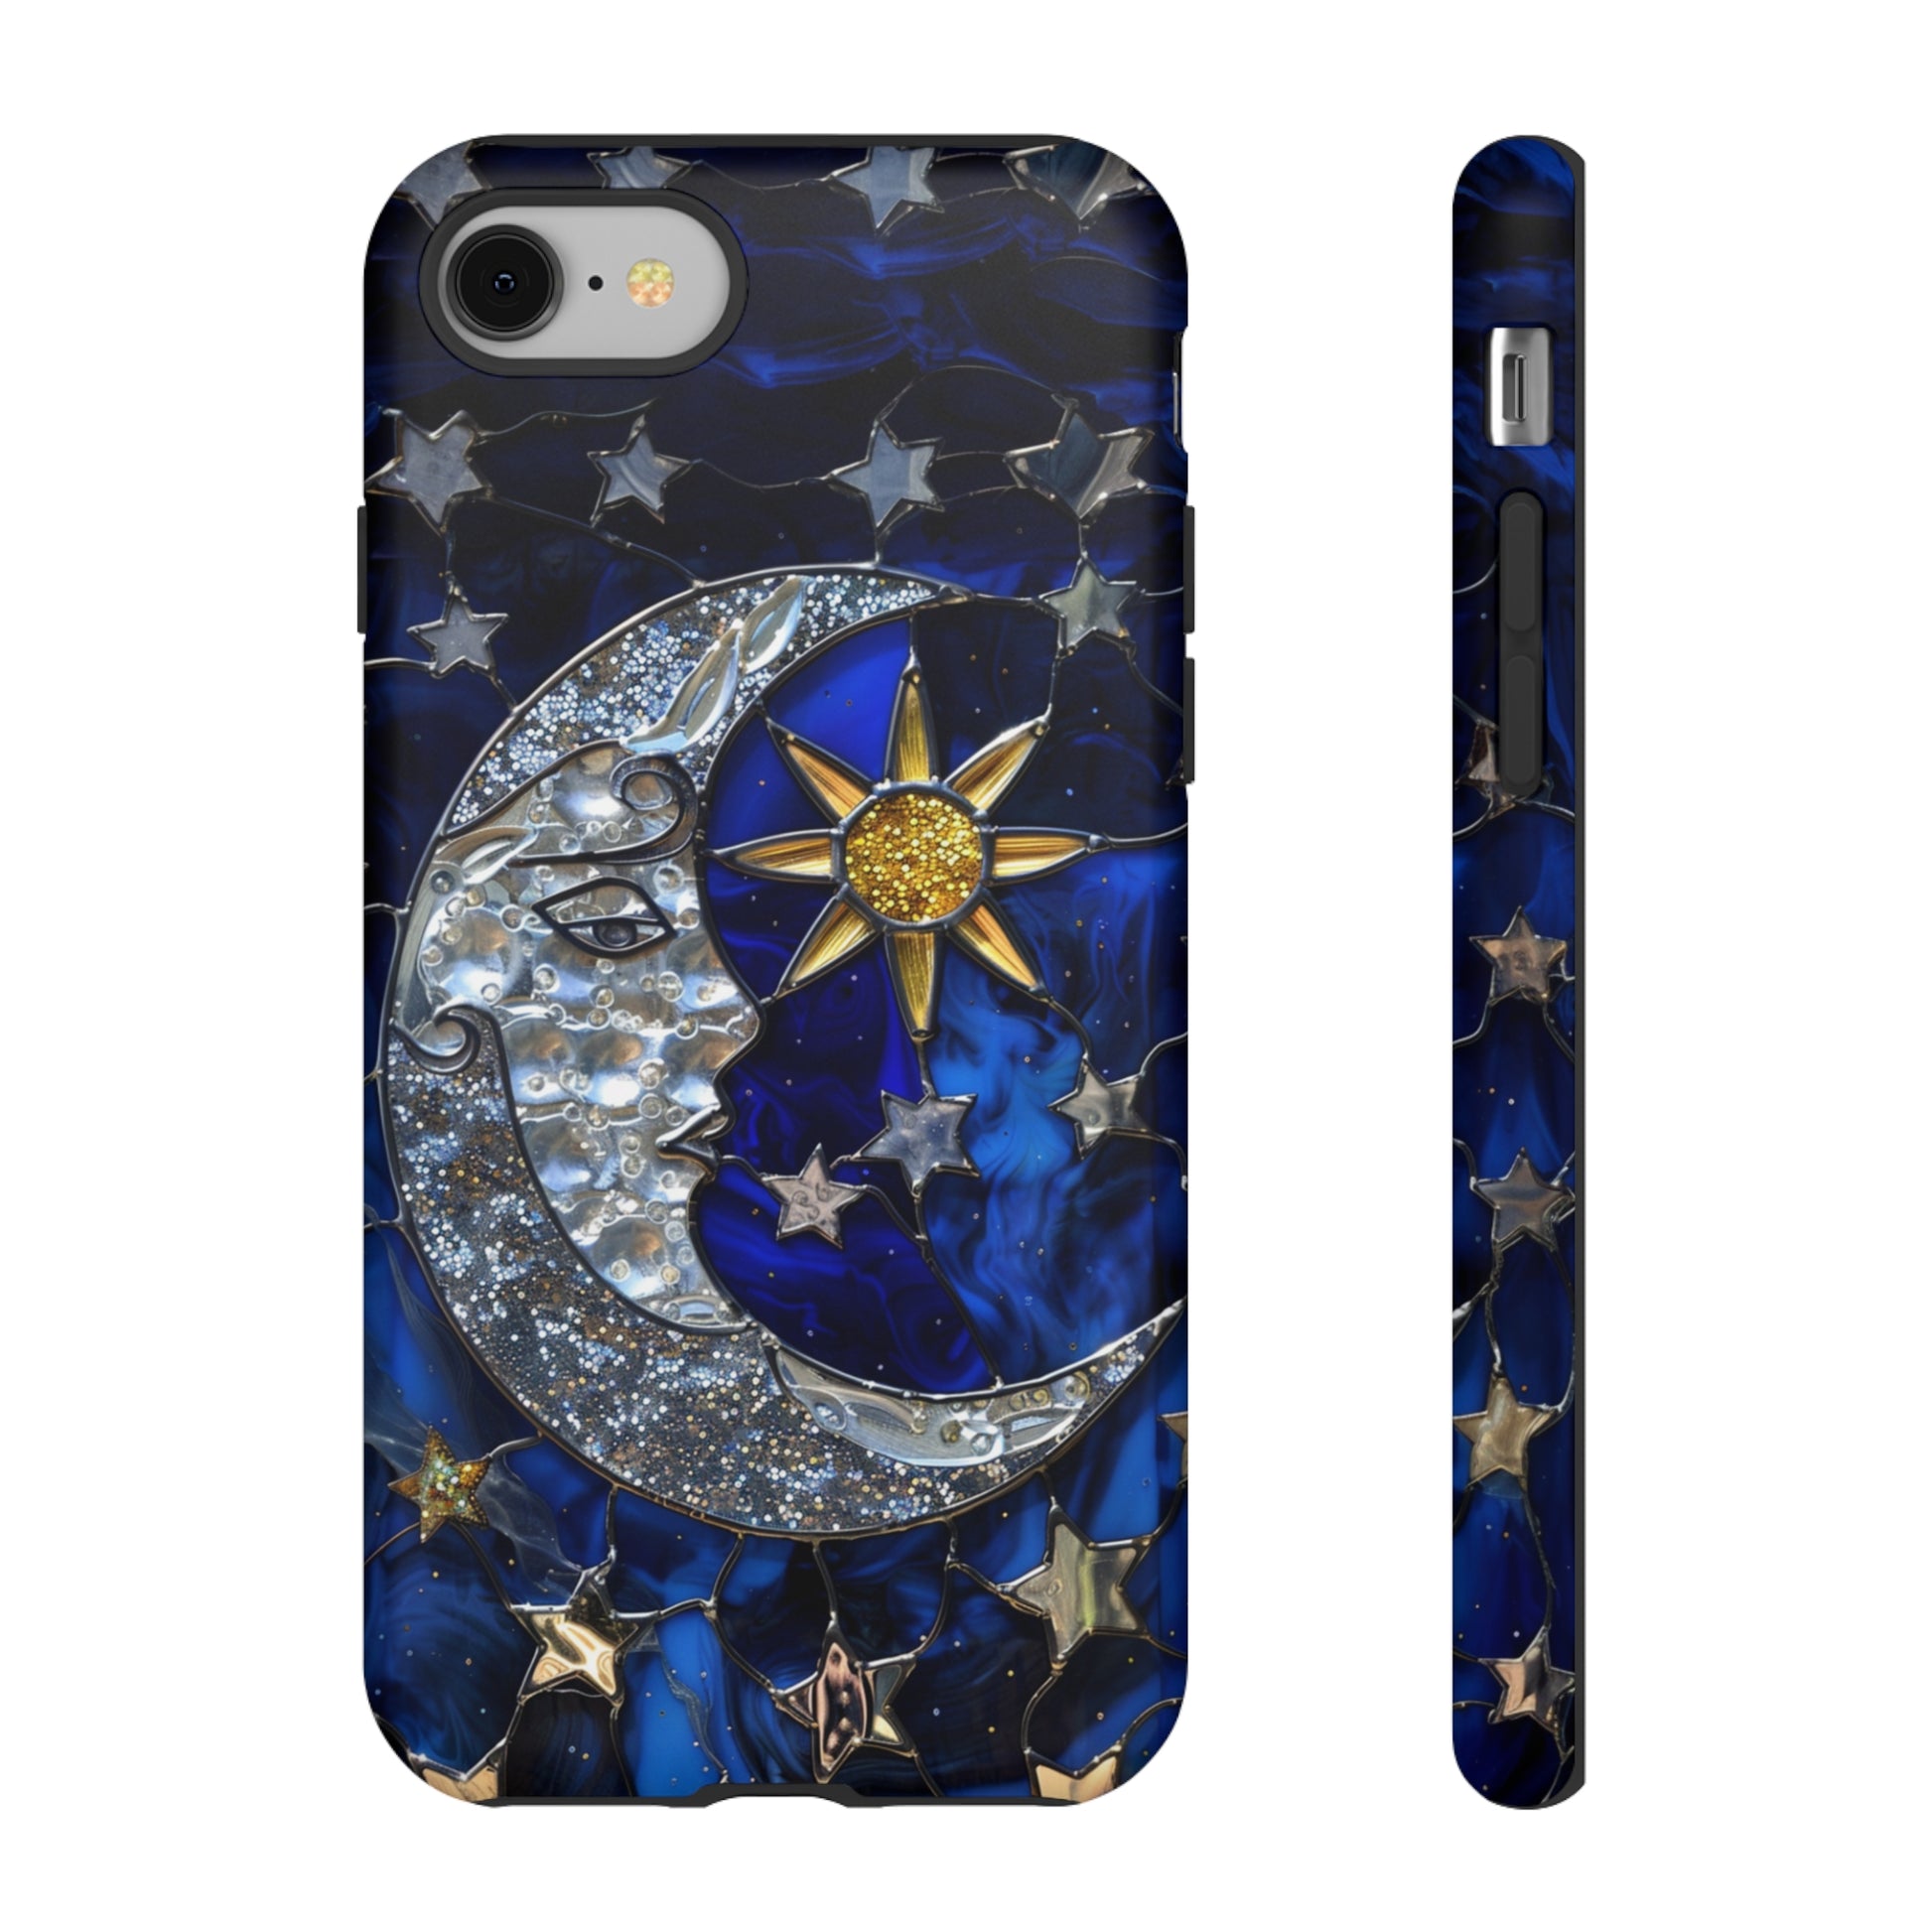 Celestial Design Phone Cover